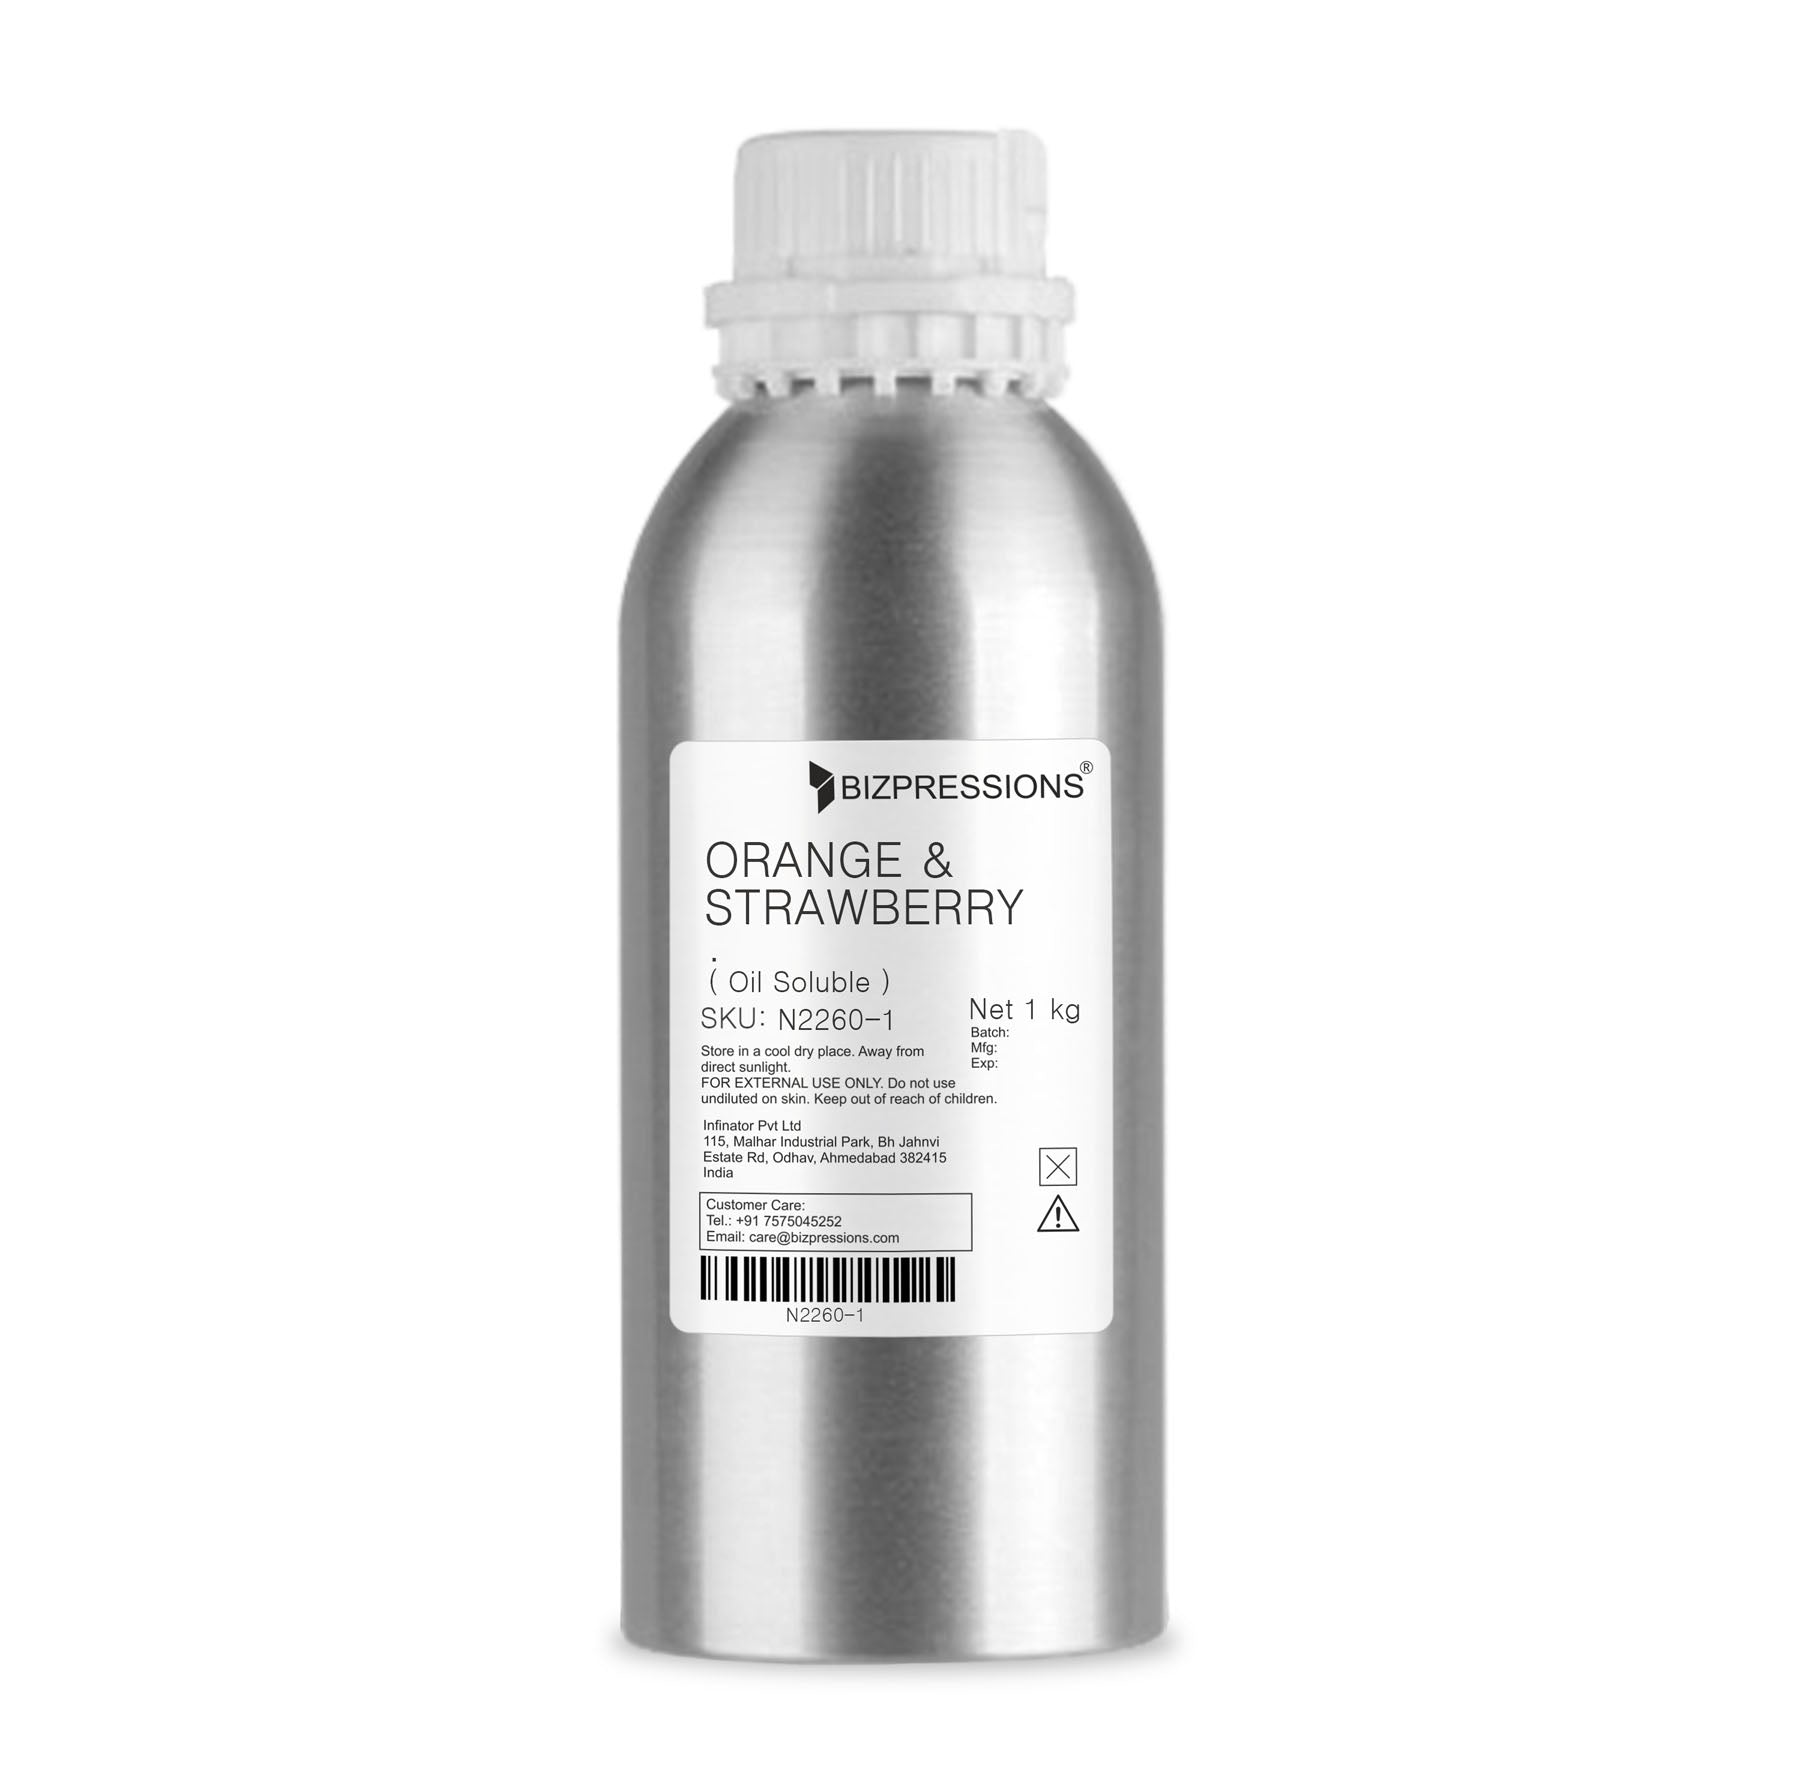 ORANGE & STRAWBERRY - Fragrance ( Oil Soluble ) - 1 kg